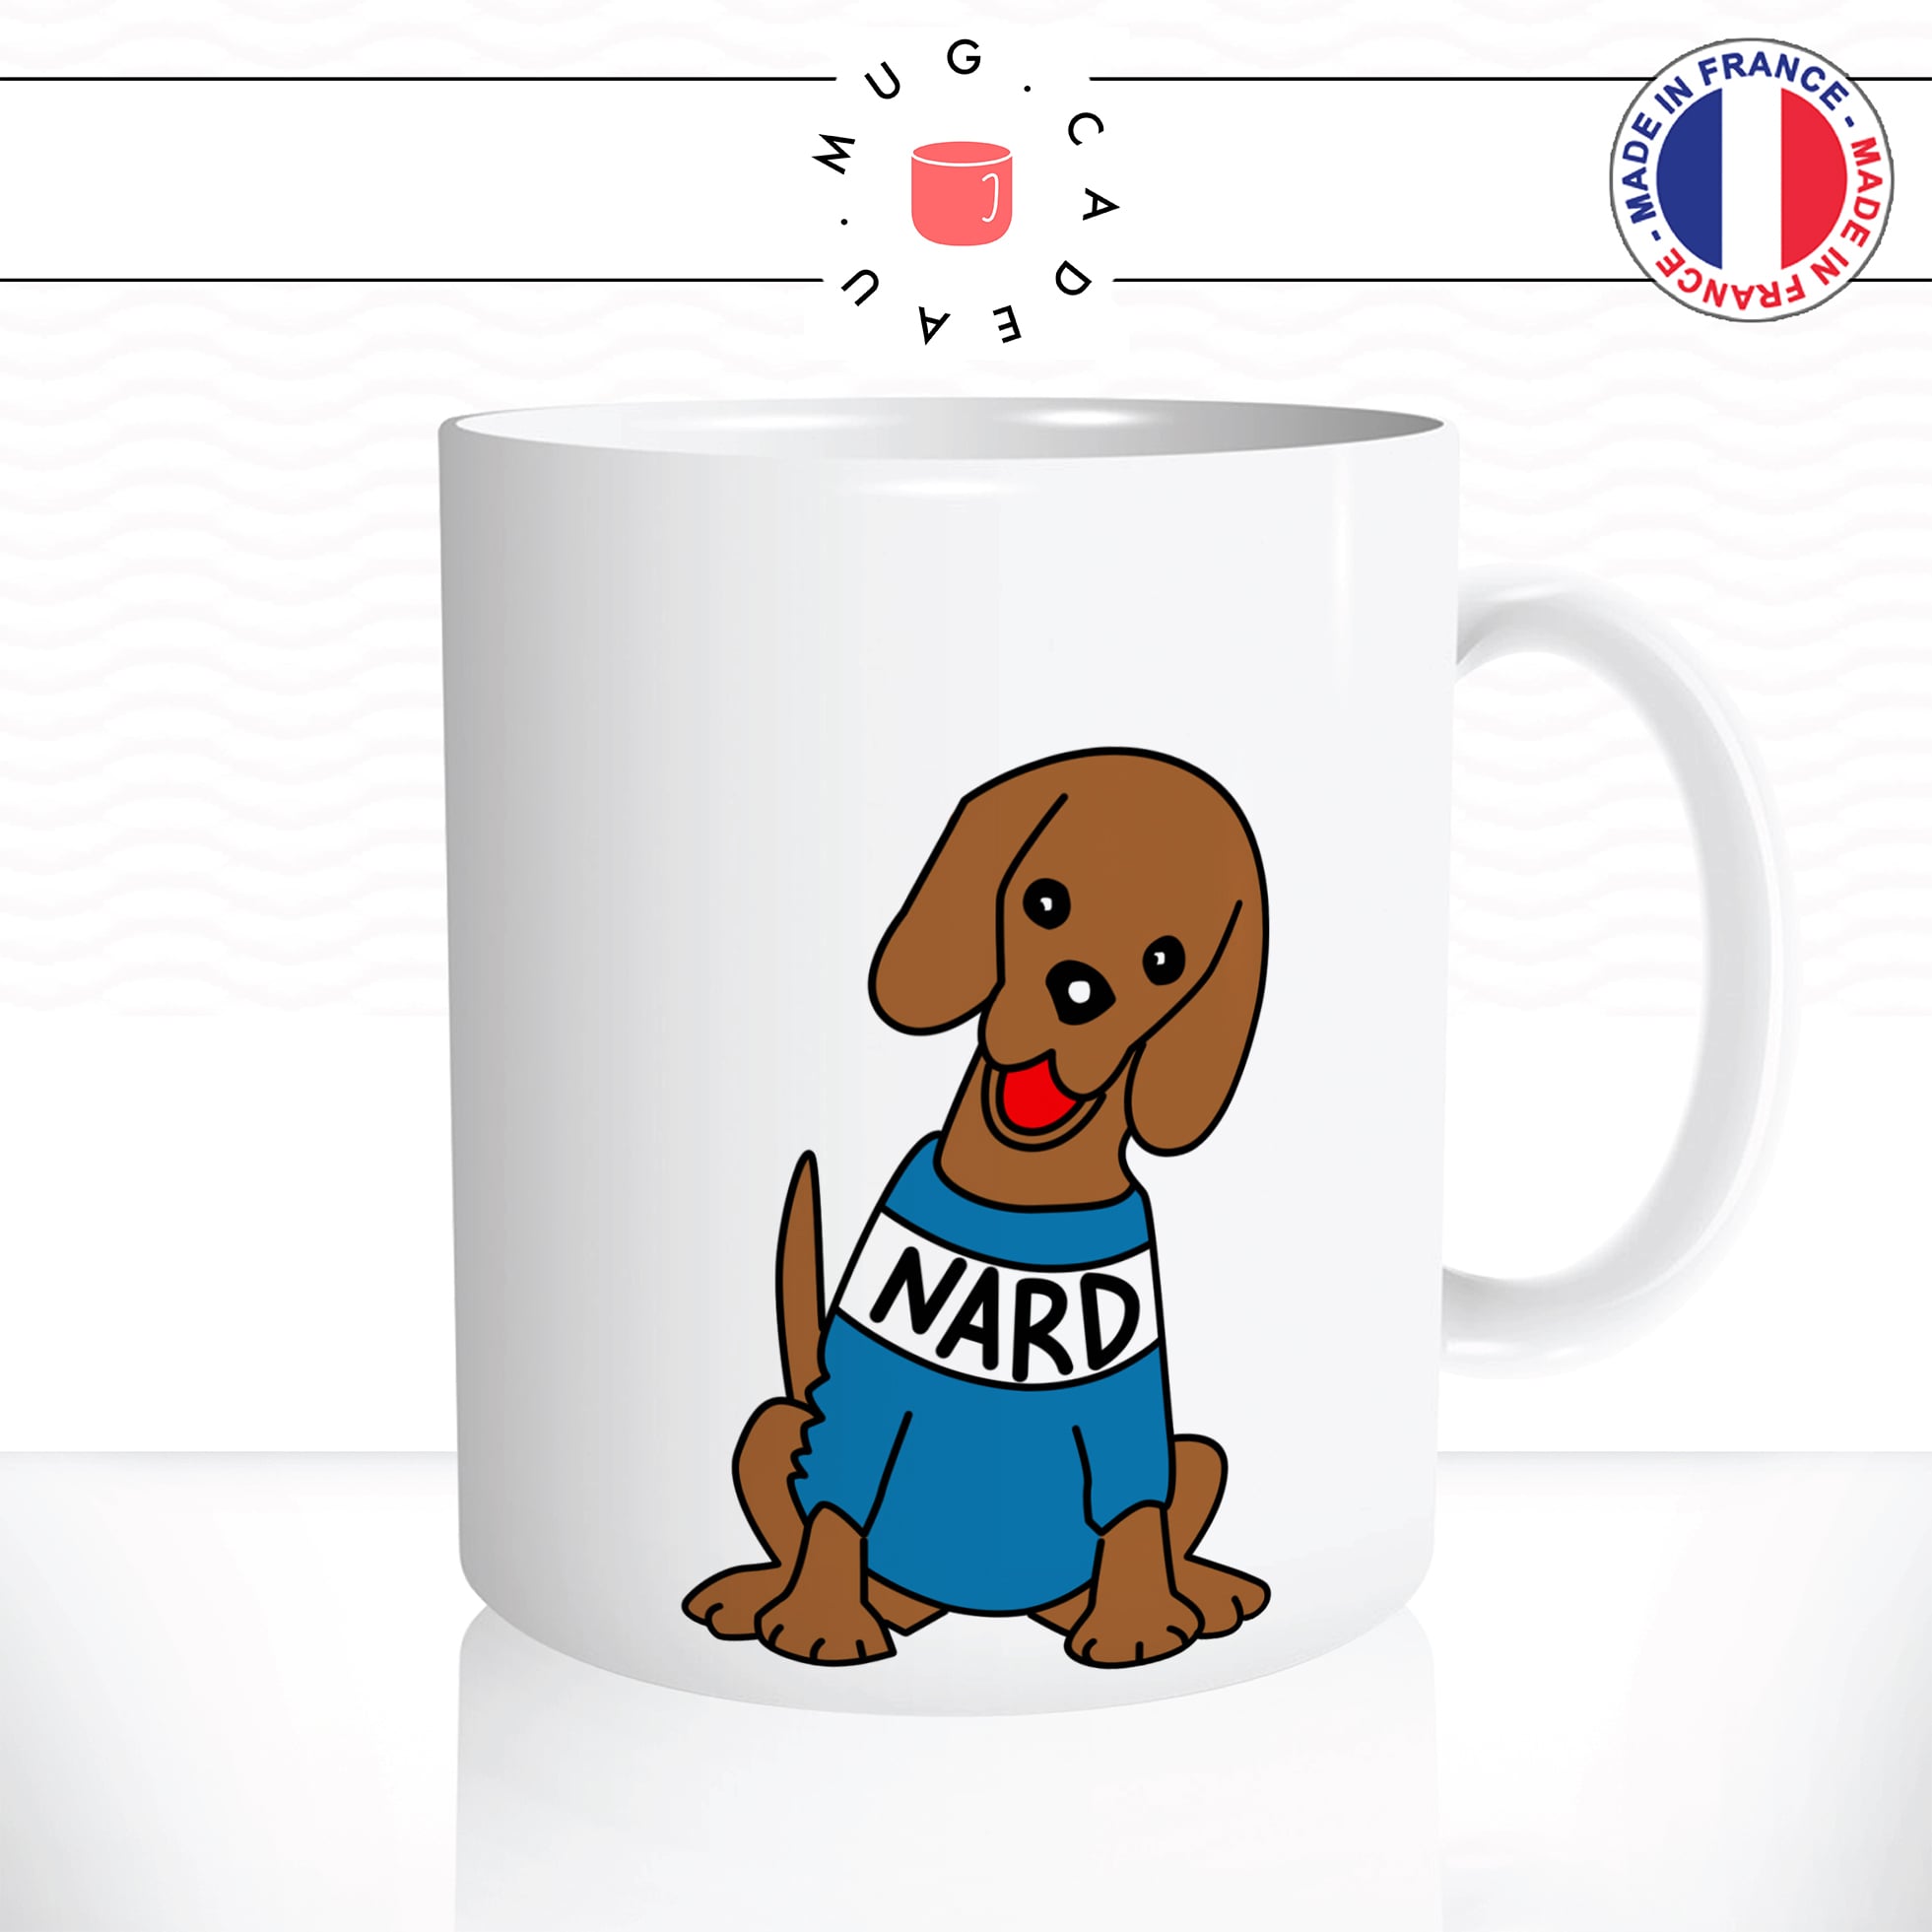 mug-tasse-nard-dog-andy-the-office-serie-bureau-chien-animal-fun-humour-café-thé-idée-cadeau-original-personnalisable2-min